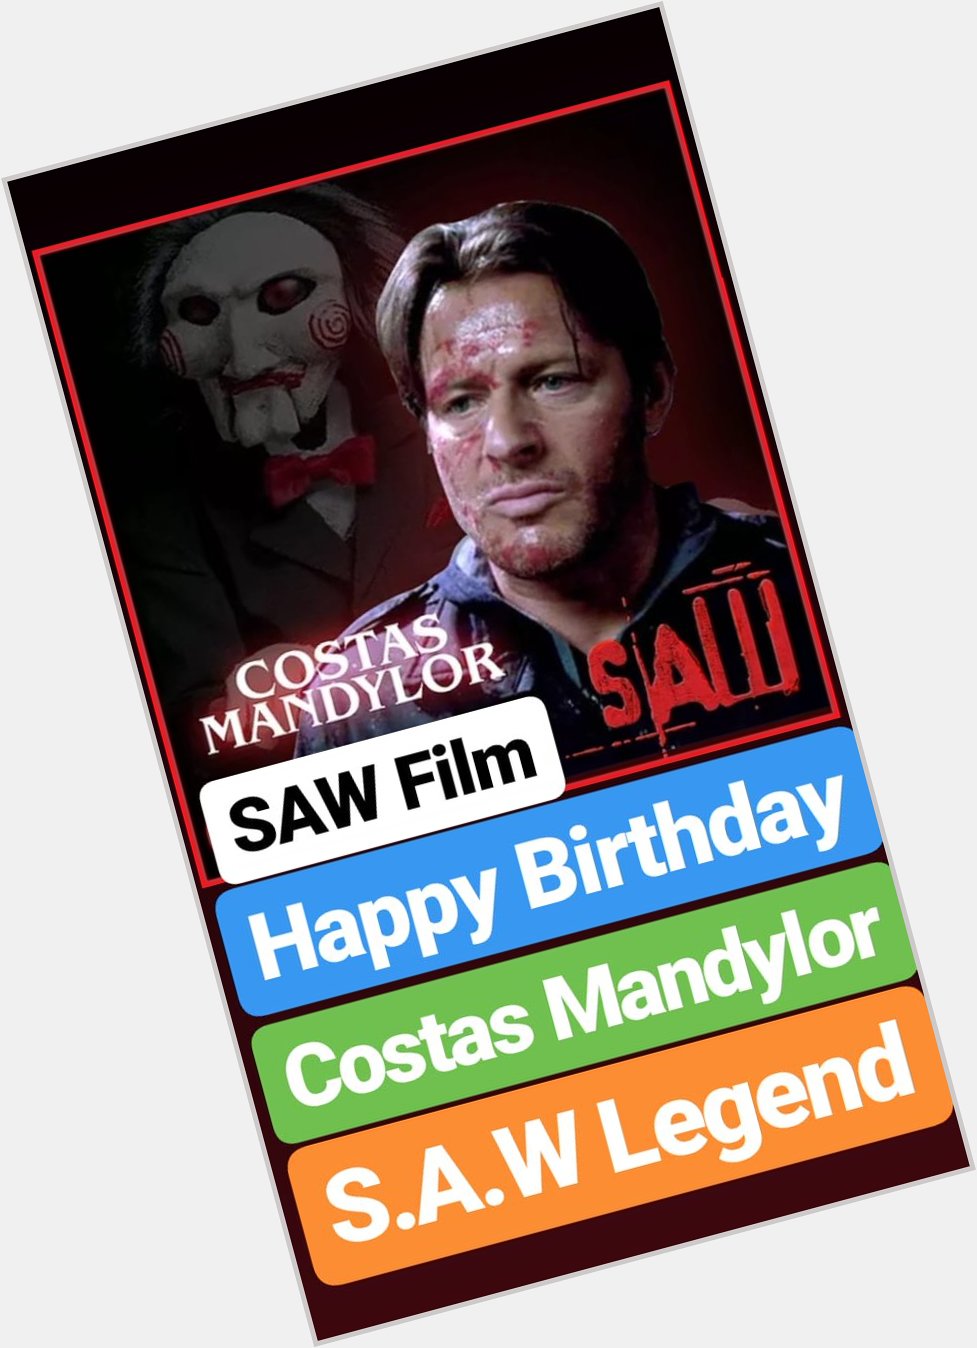 HAPPY BIRTHDAY 
Costas Mandylor SAW FILMS Legend 
S.A.W HORROR FILM ACTOR  